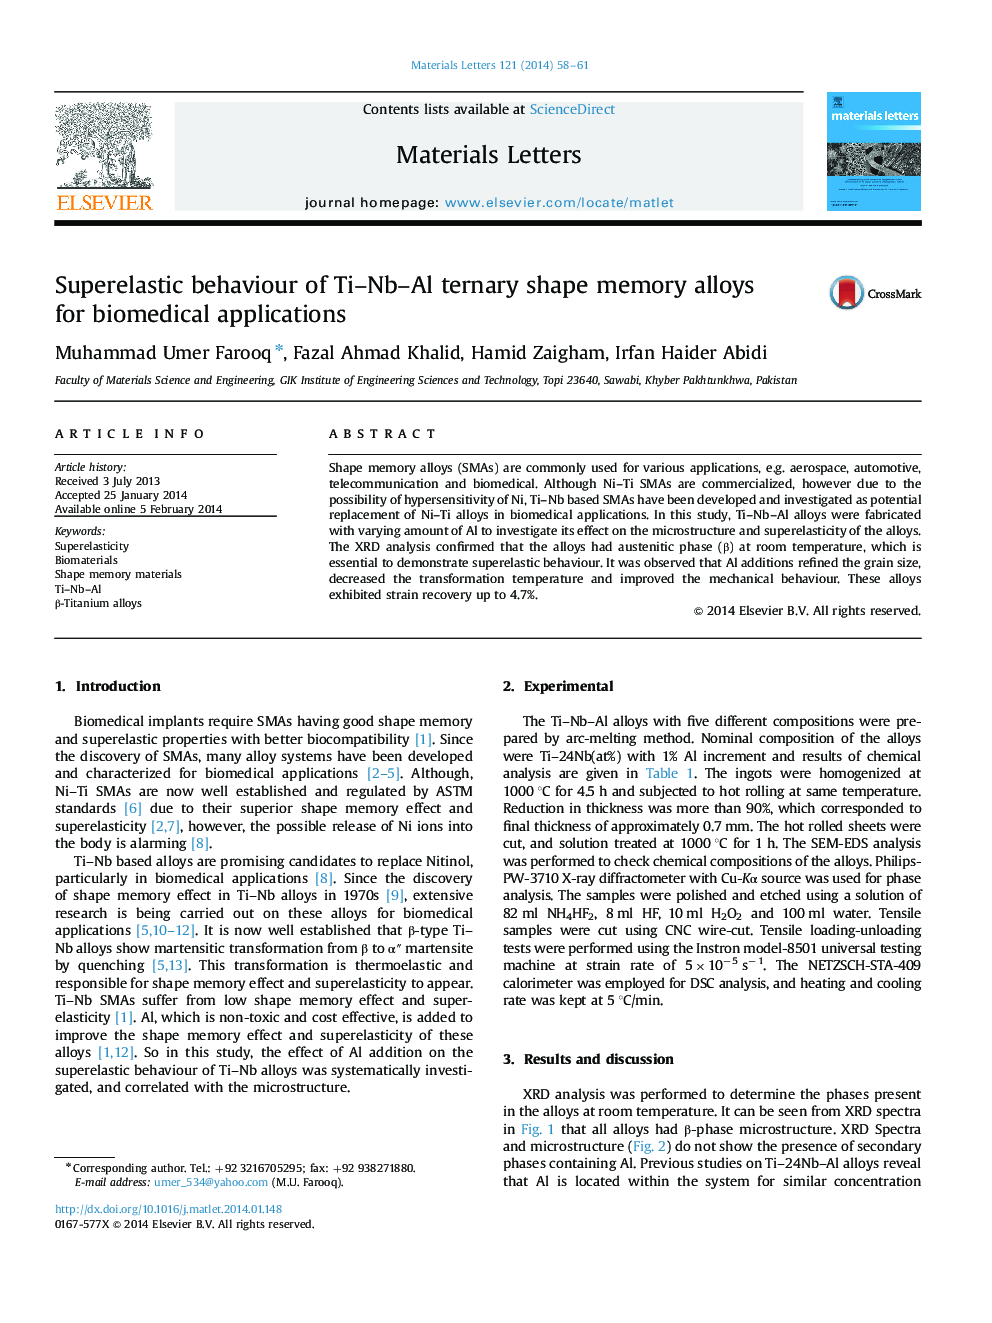 Superelastic behaviour of Ti-Nb-Al ternary shape memory alloys for biomedical applications